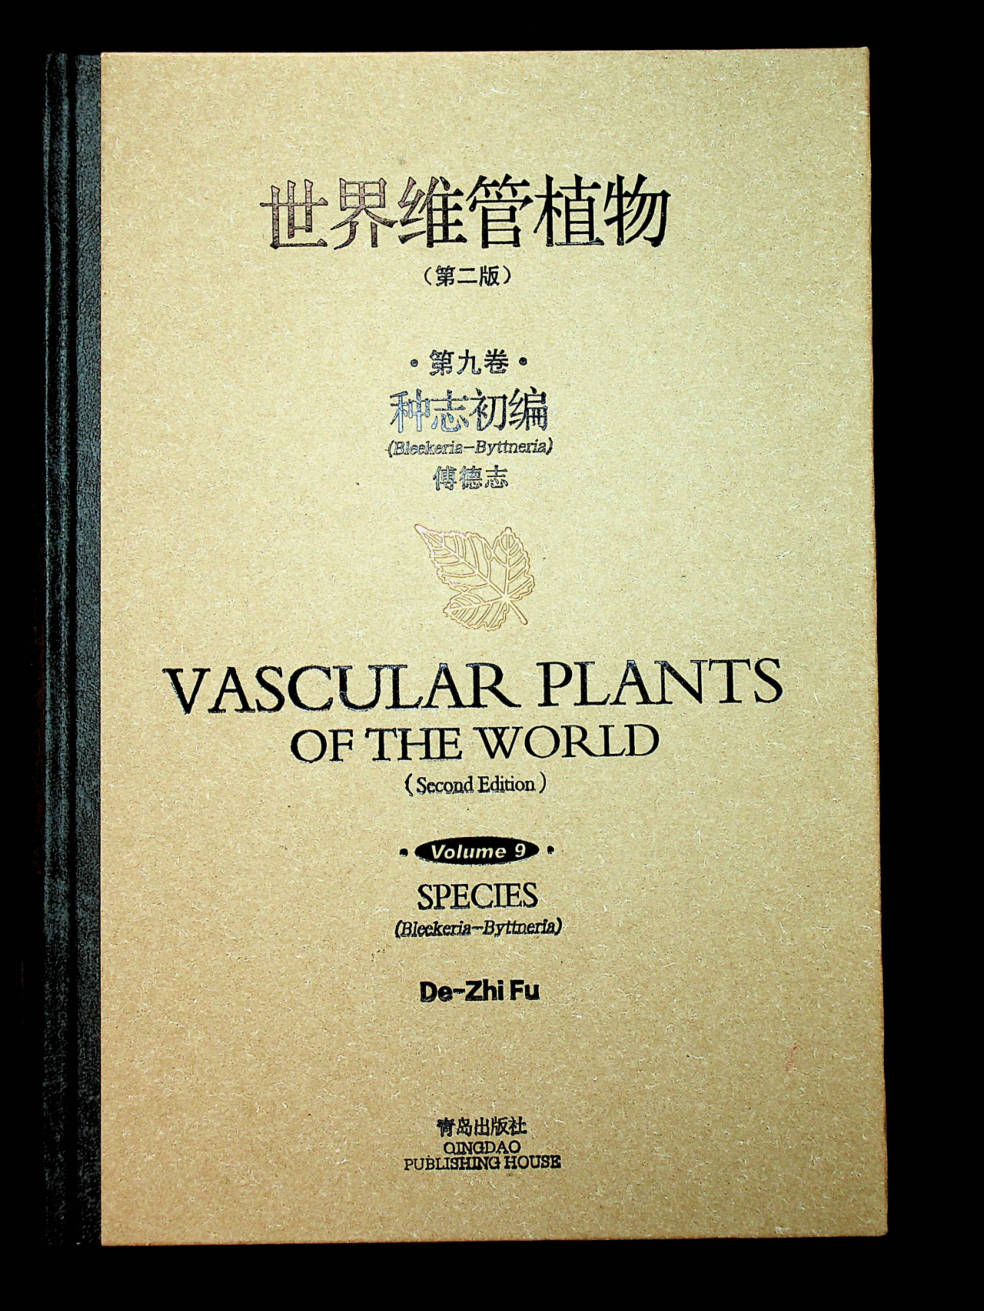 世界维管植物 第二版 第九卷 种志初编 （Bleekeria-Byttneria)  VASCULAR PLANTS OF THE WORLD (Second Edition) Volume 9 SPECIES（Bleekeria-Byttneria)